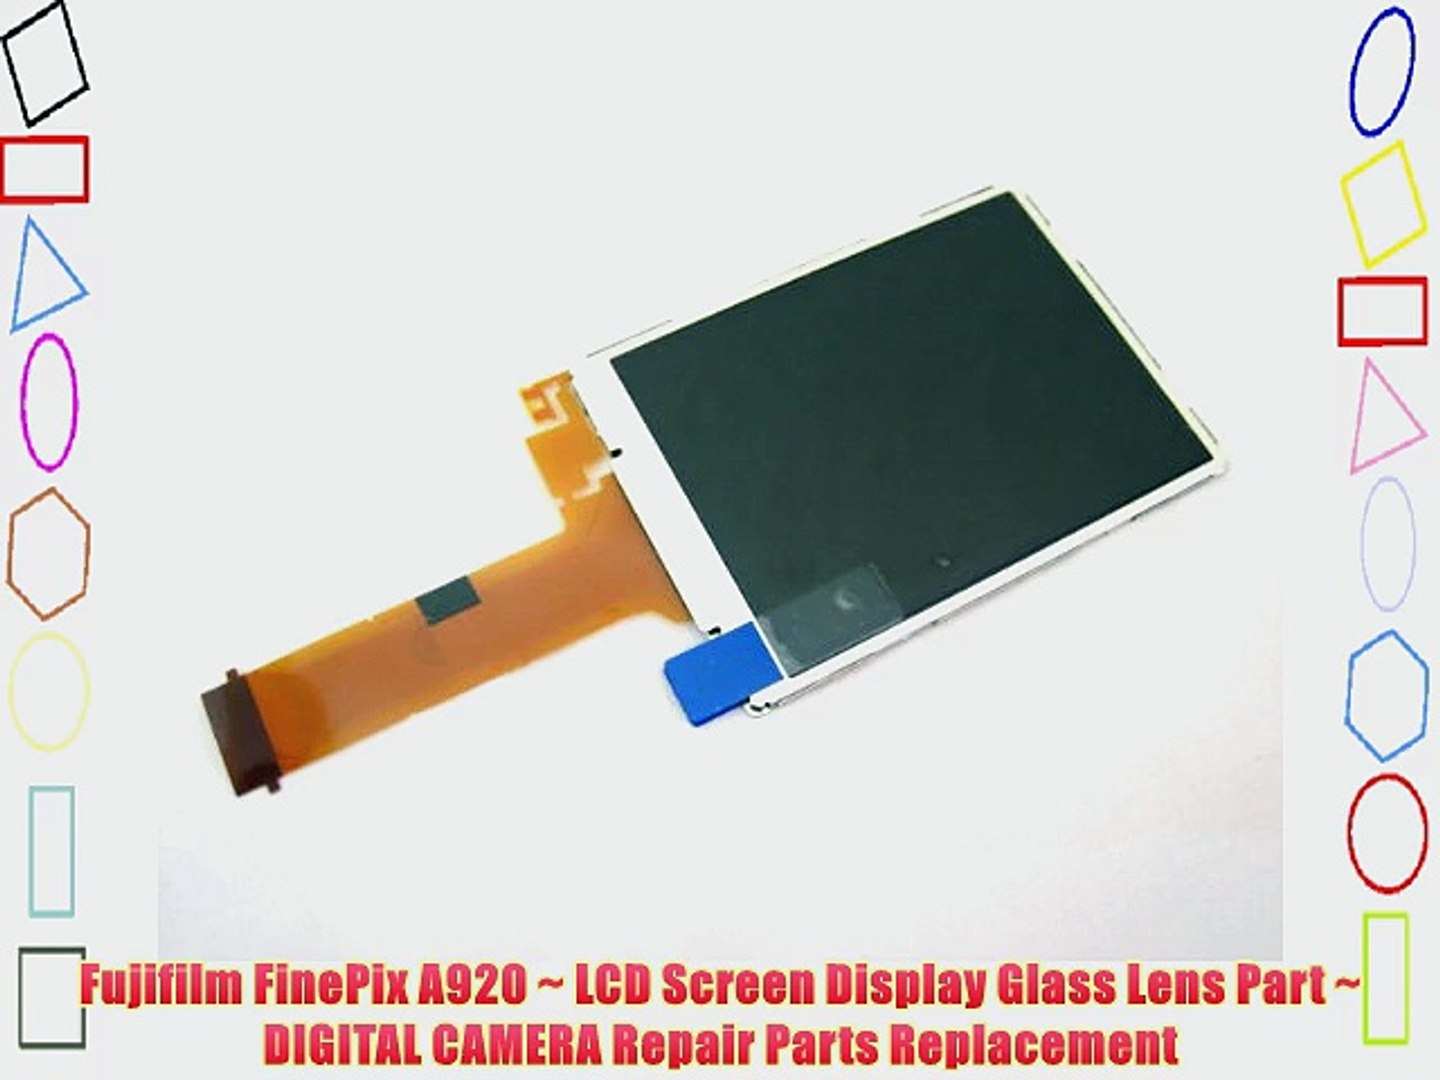 Minachting Rond en rond Rudyard Kipling Fujifilm FinePix A920 ~ LCD Screen Display Glass Lens Part ~ DIGITAL CAMERA  Repair Parts Replacement - video Dailymotion